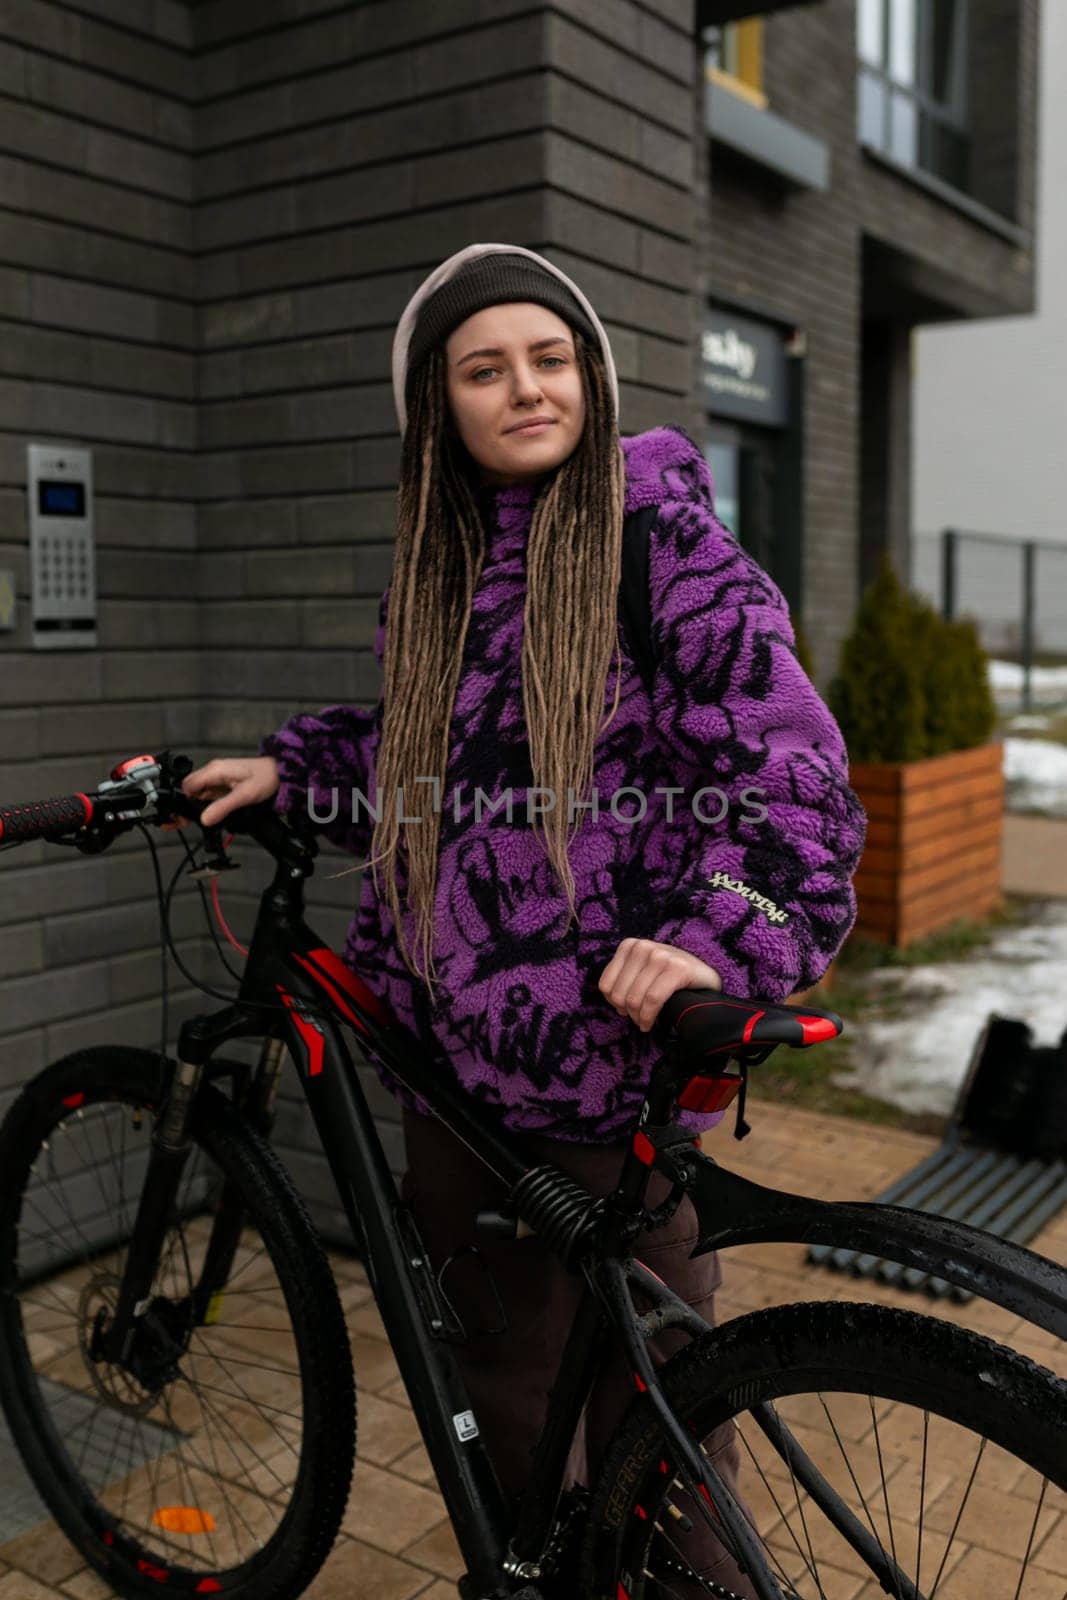 European stylish woman enjoys riding a bicycle.